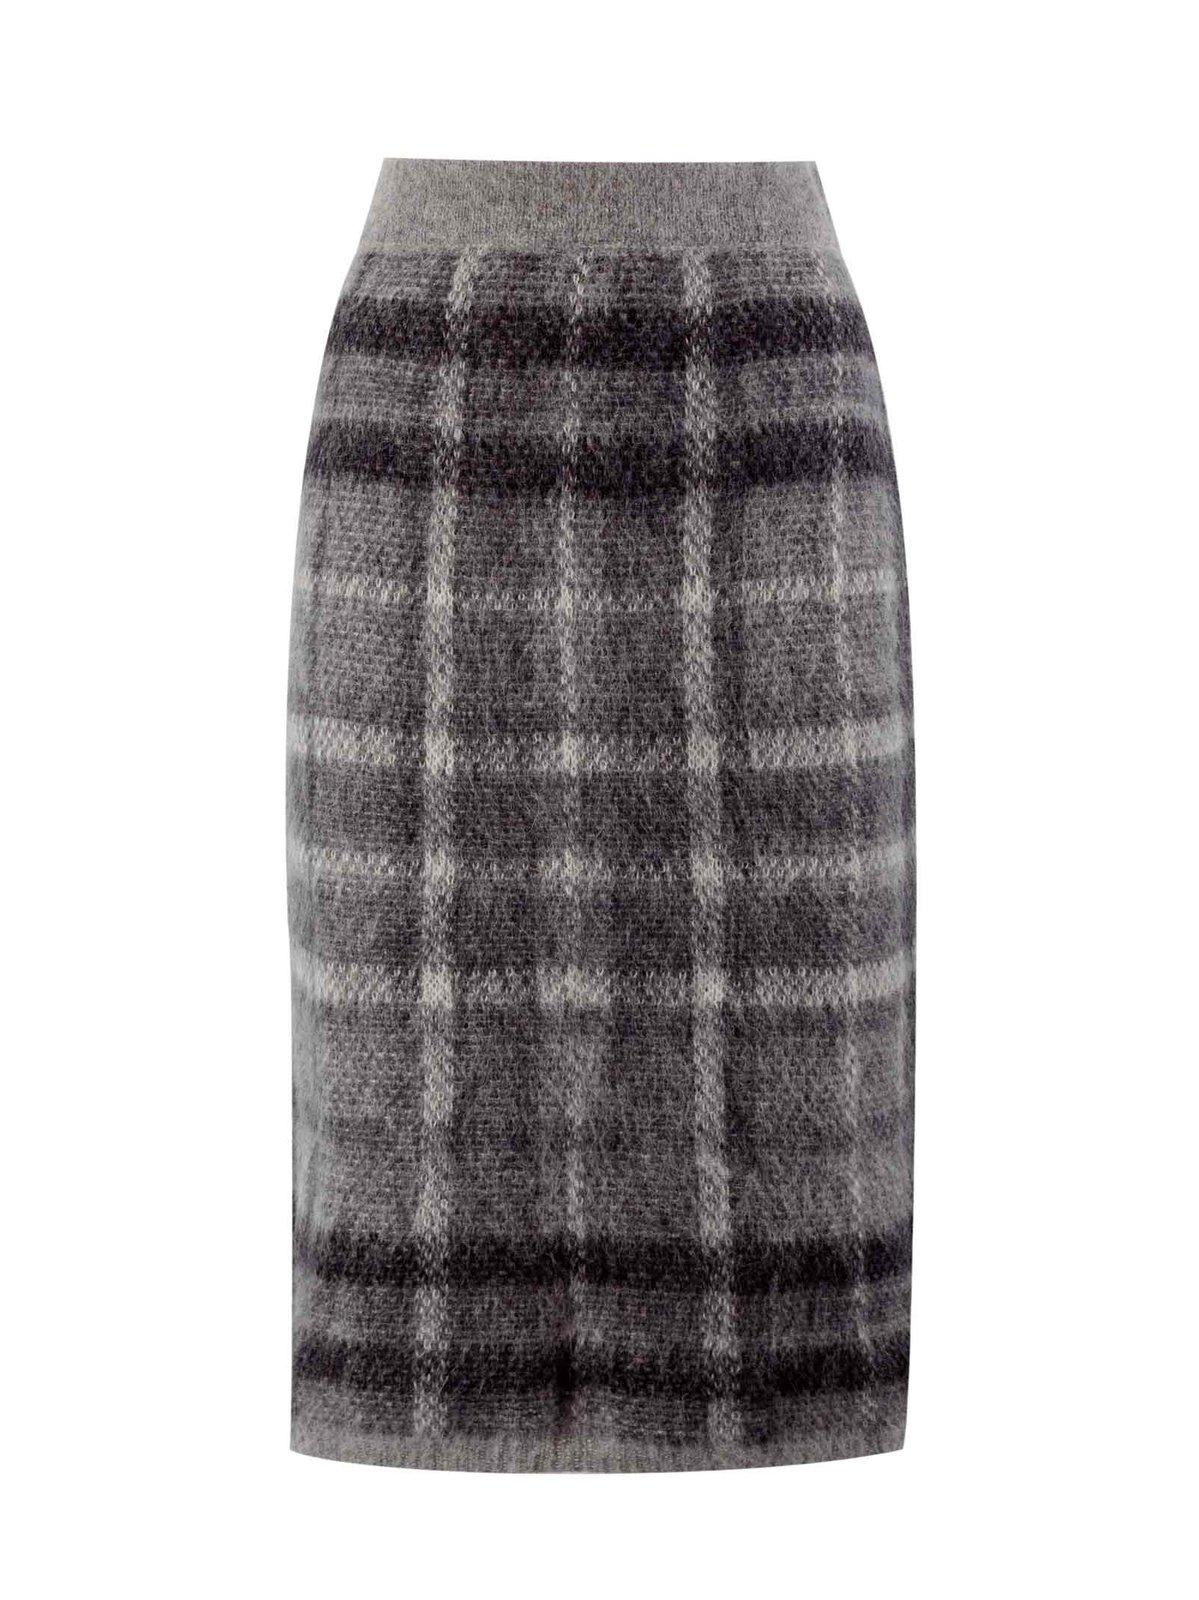 Max Mara Studio Checked Knitted Pencil Skirt